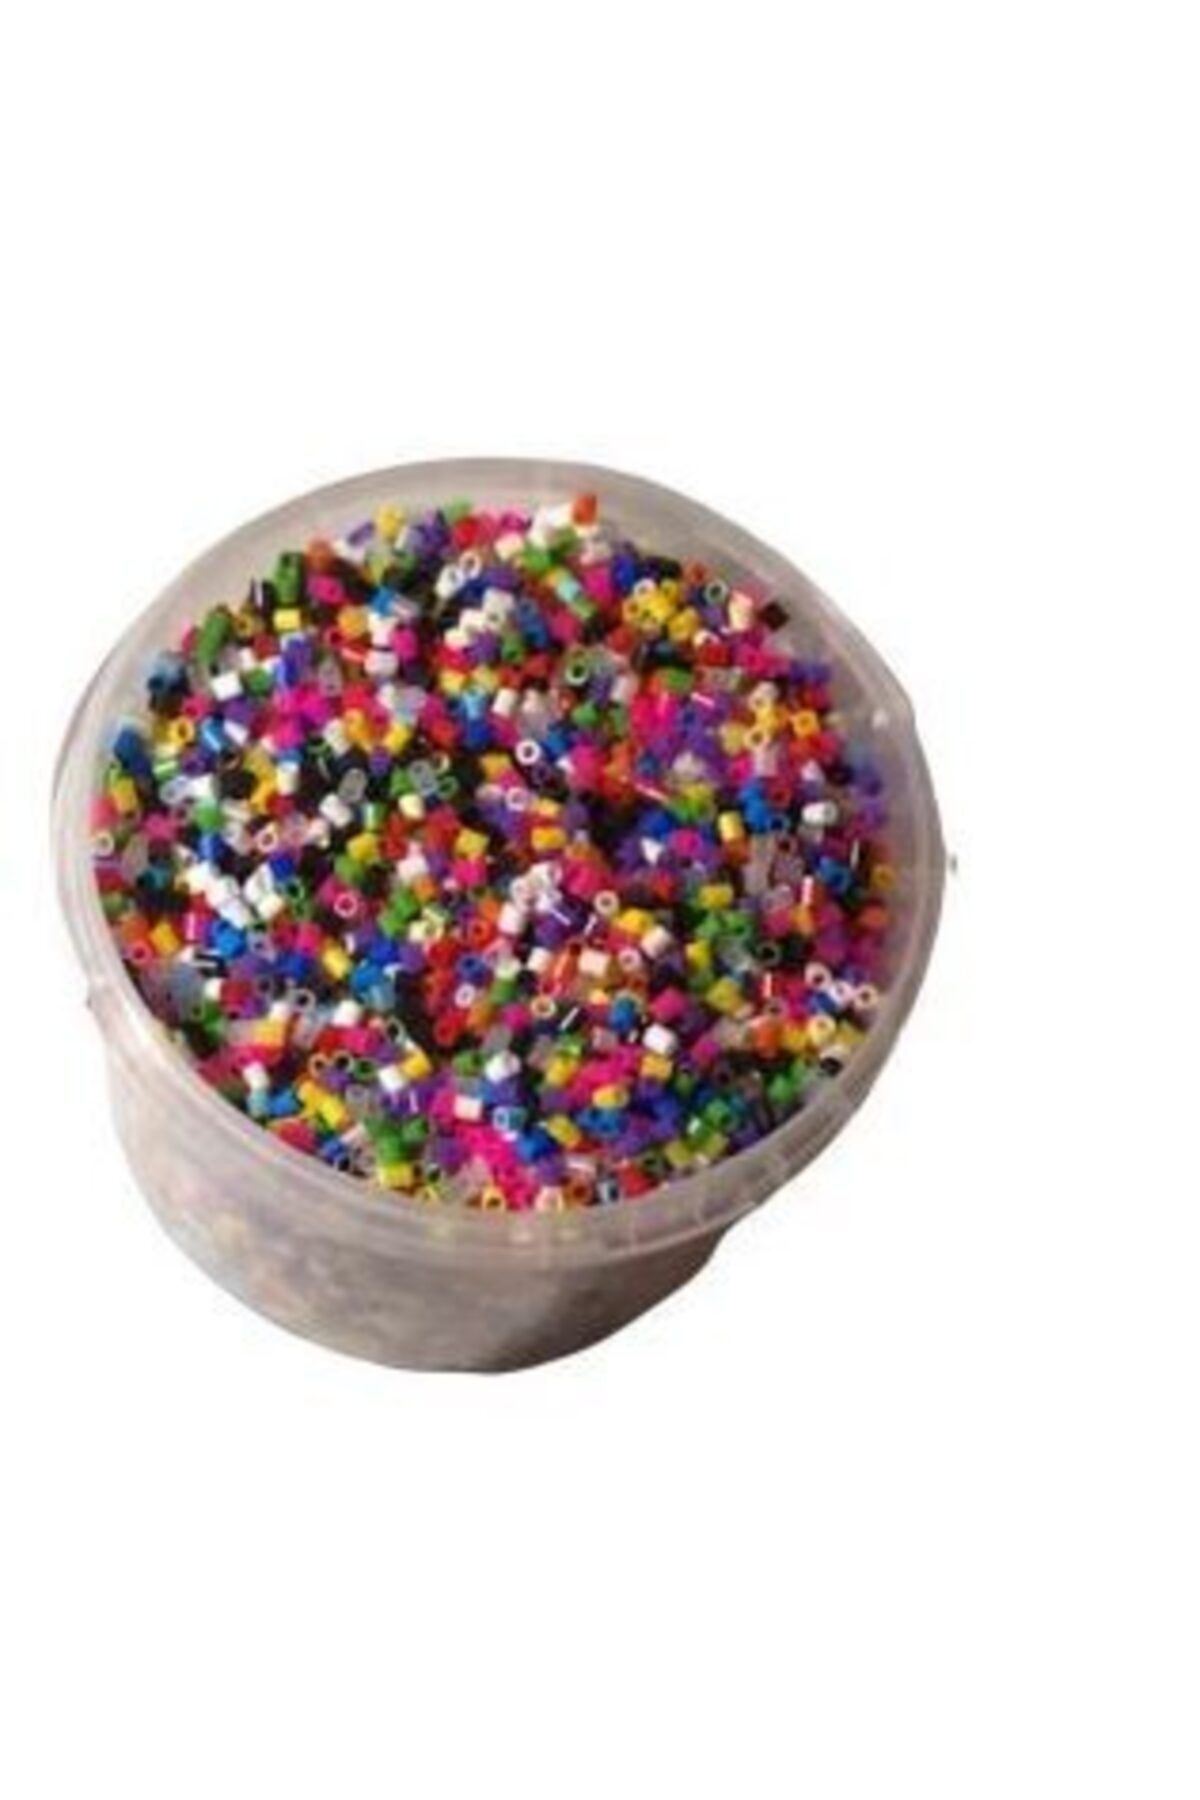 Hdg Renkli Plastik Boncuk 5 Mm - 12.000 Adet Karışık Renkler Hobi Ve Aksesuar Boncuk Seti